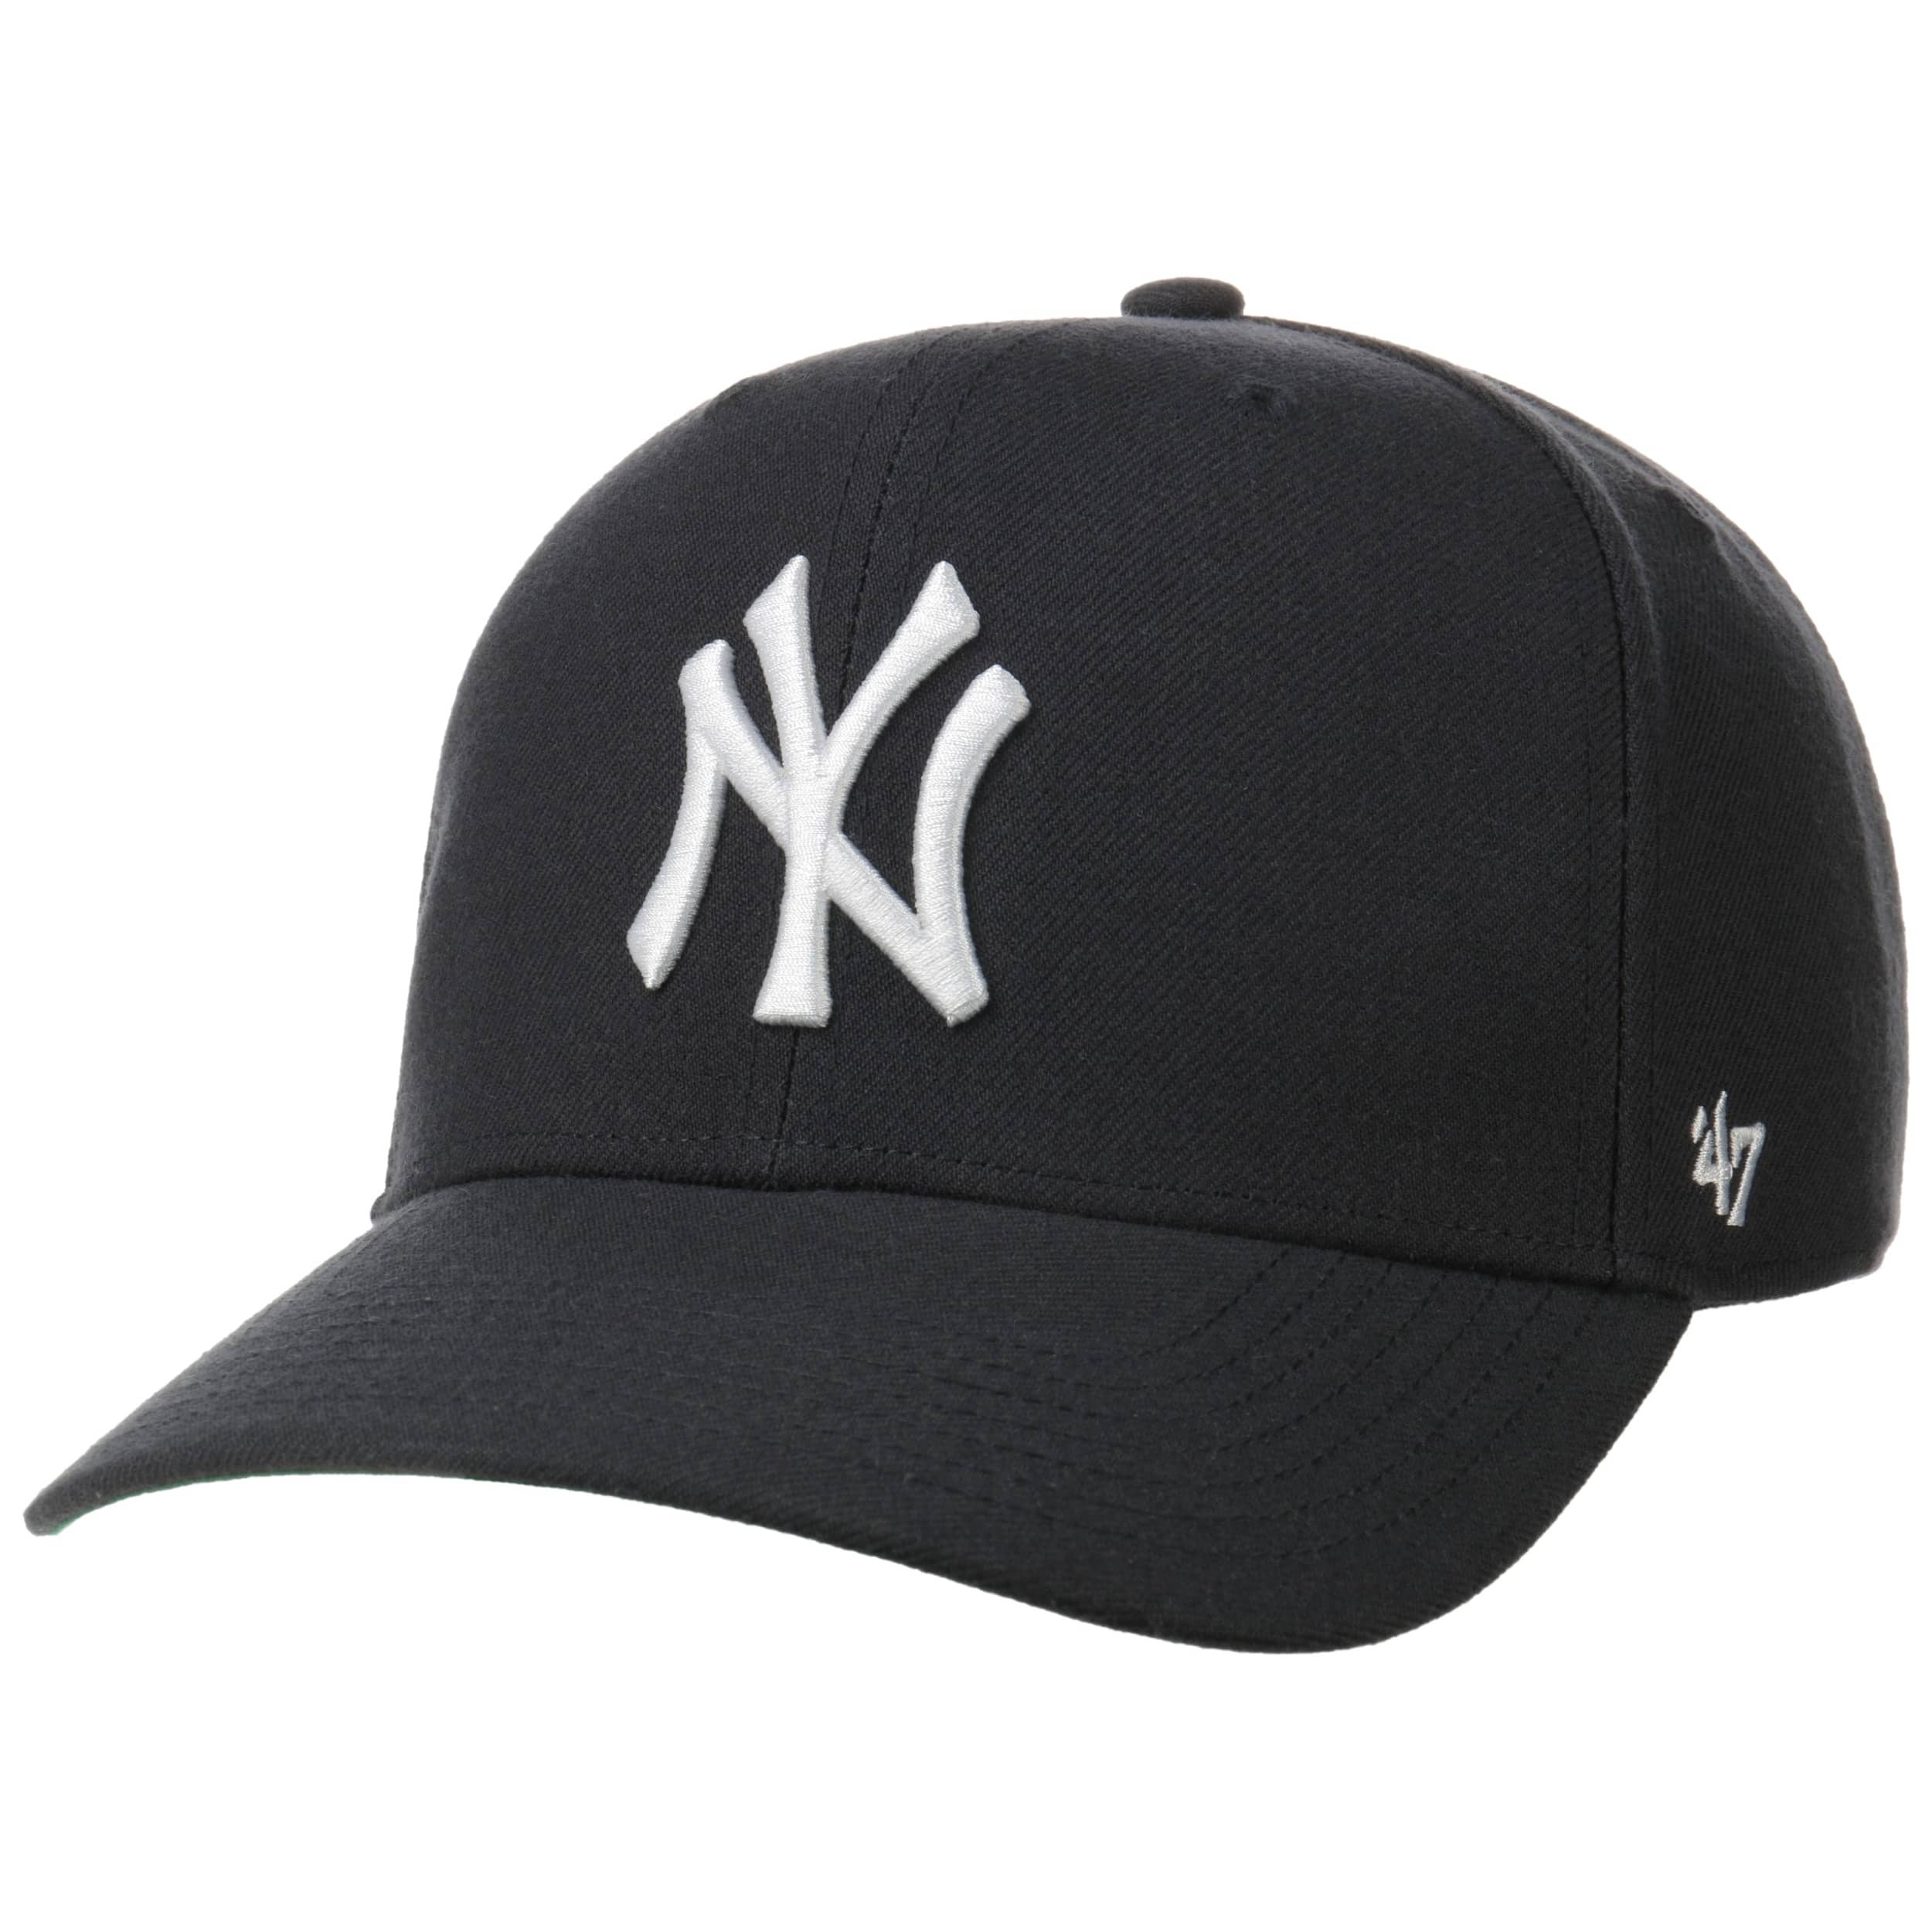 Vintage New York Yankees MLB Baseball Jersey Grey 2XL, Vintage Online